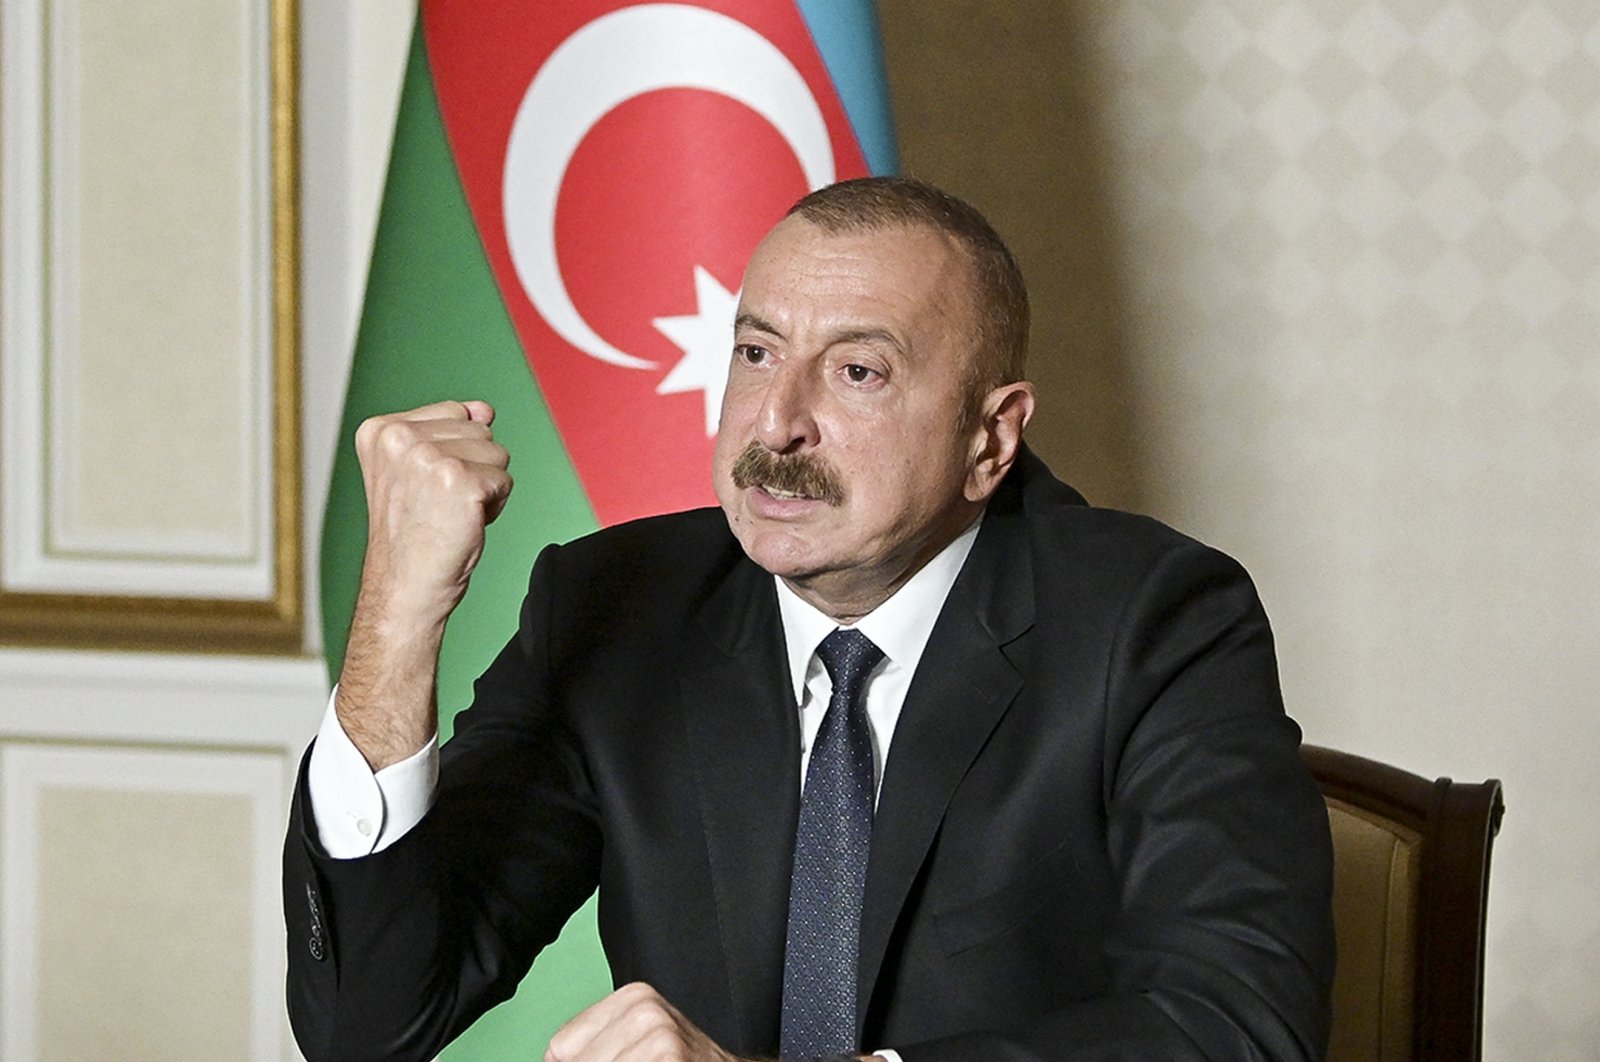 Azerbaijani President Ilham Aliyev gestures as he addresses the nation in Baku, Azerbaijan, Oct. 20, 2020. (AP Photo)